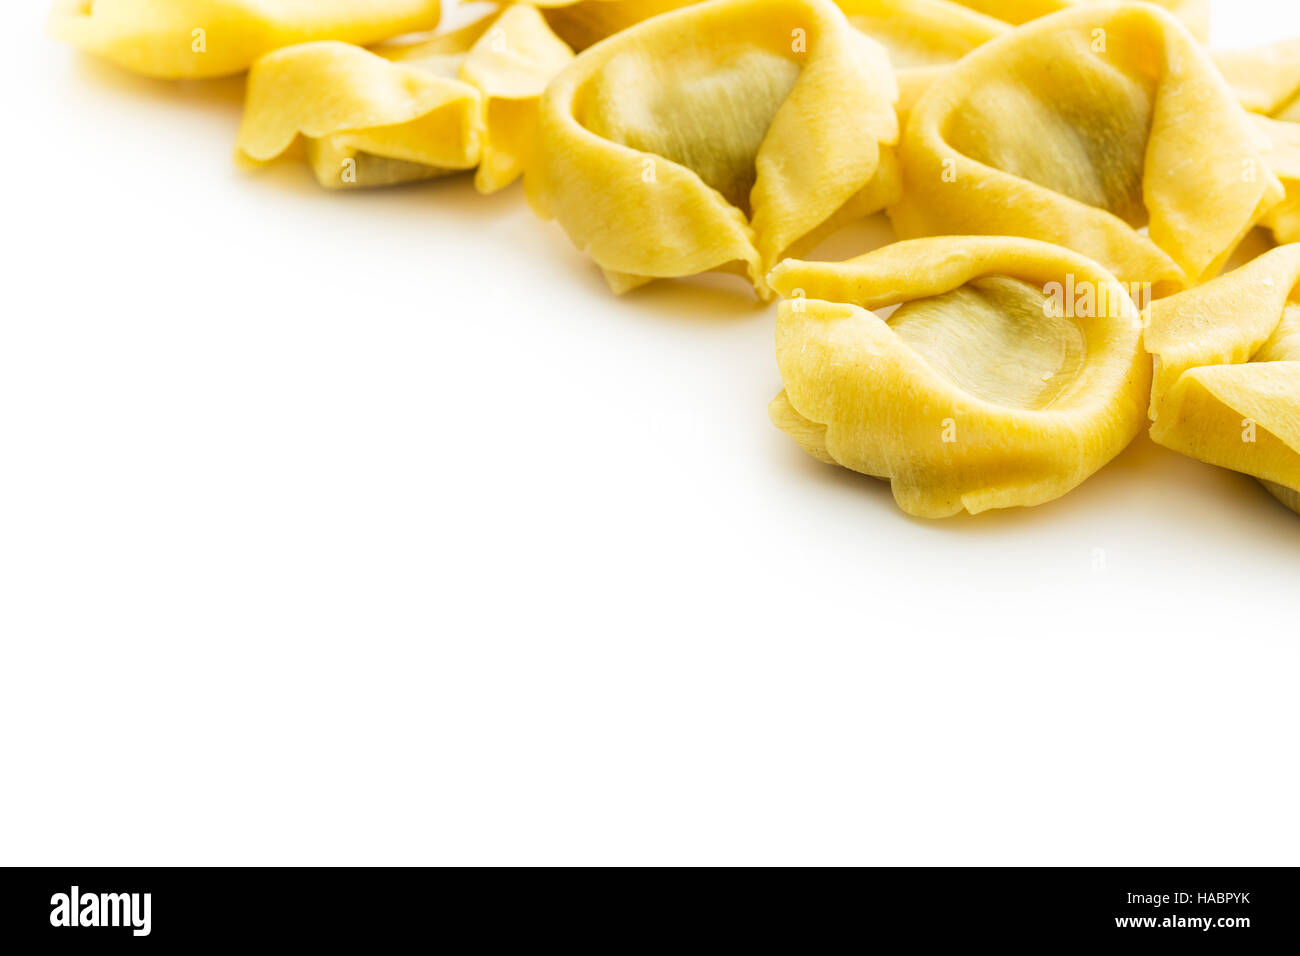 https://c8.alamy.com/comp/HABPYK/italian-traditional-tortellini-pasta-isolated-on-white-background-HABPYK.jpg